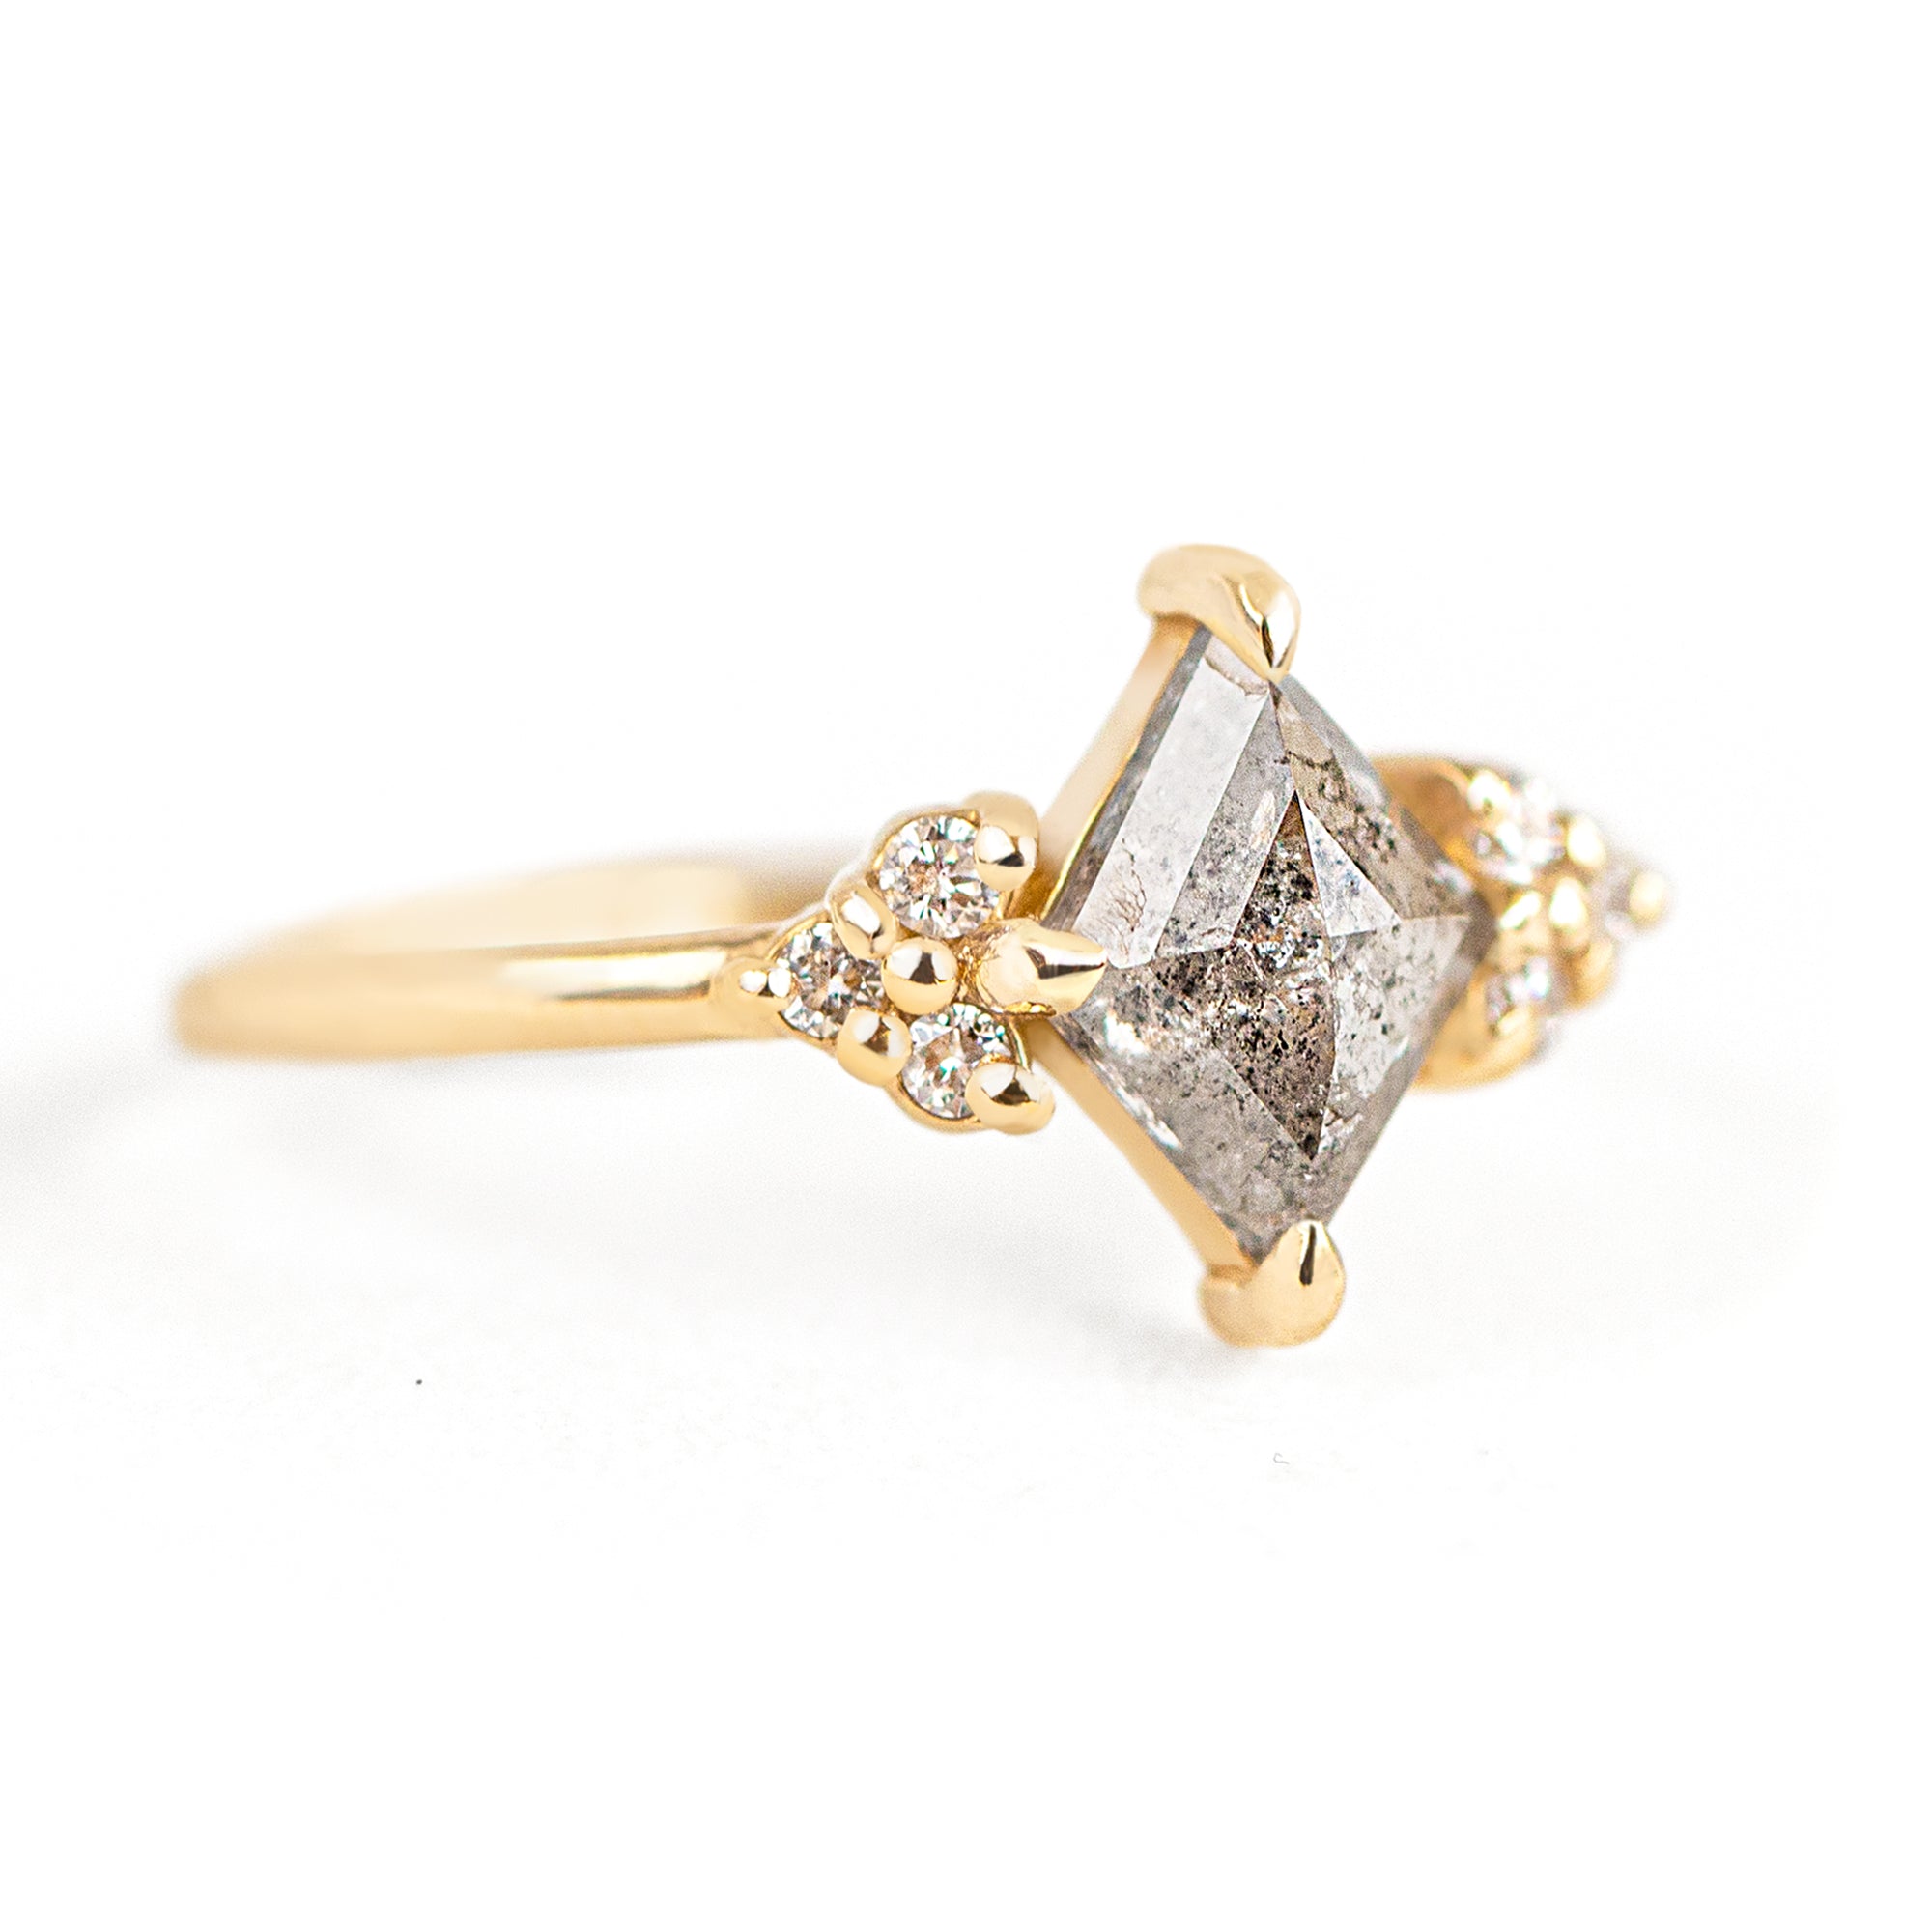 Jamie Park Jewelry - 3/4ct. Sienna Kite Cut Salt and Pepper Diamond Ring